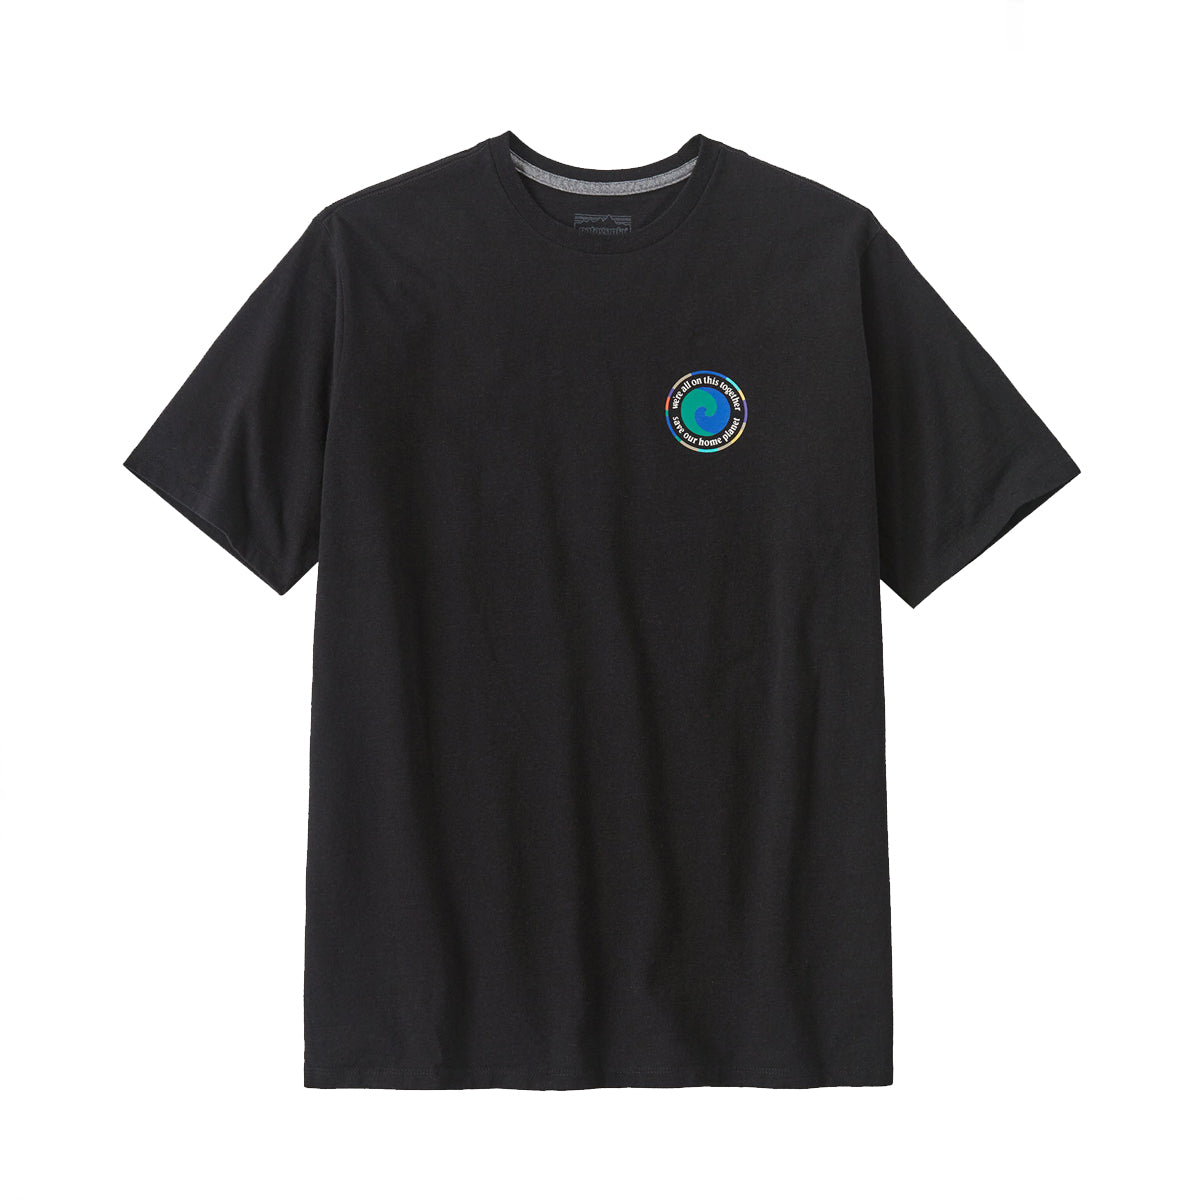 Patagonia - T-Shirt Unity Fitz Responsibili-Tee® Ink Black - 37768 - INK/BLACK